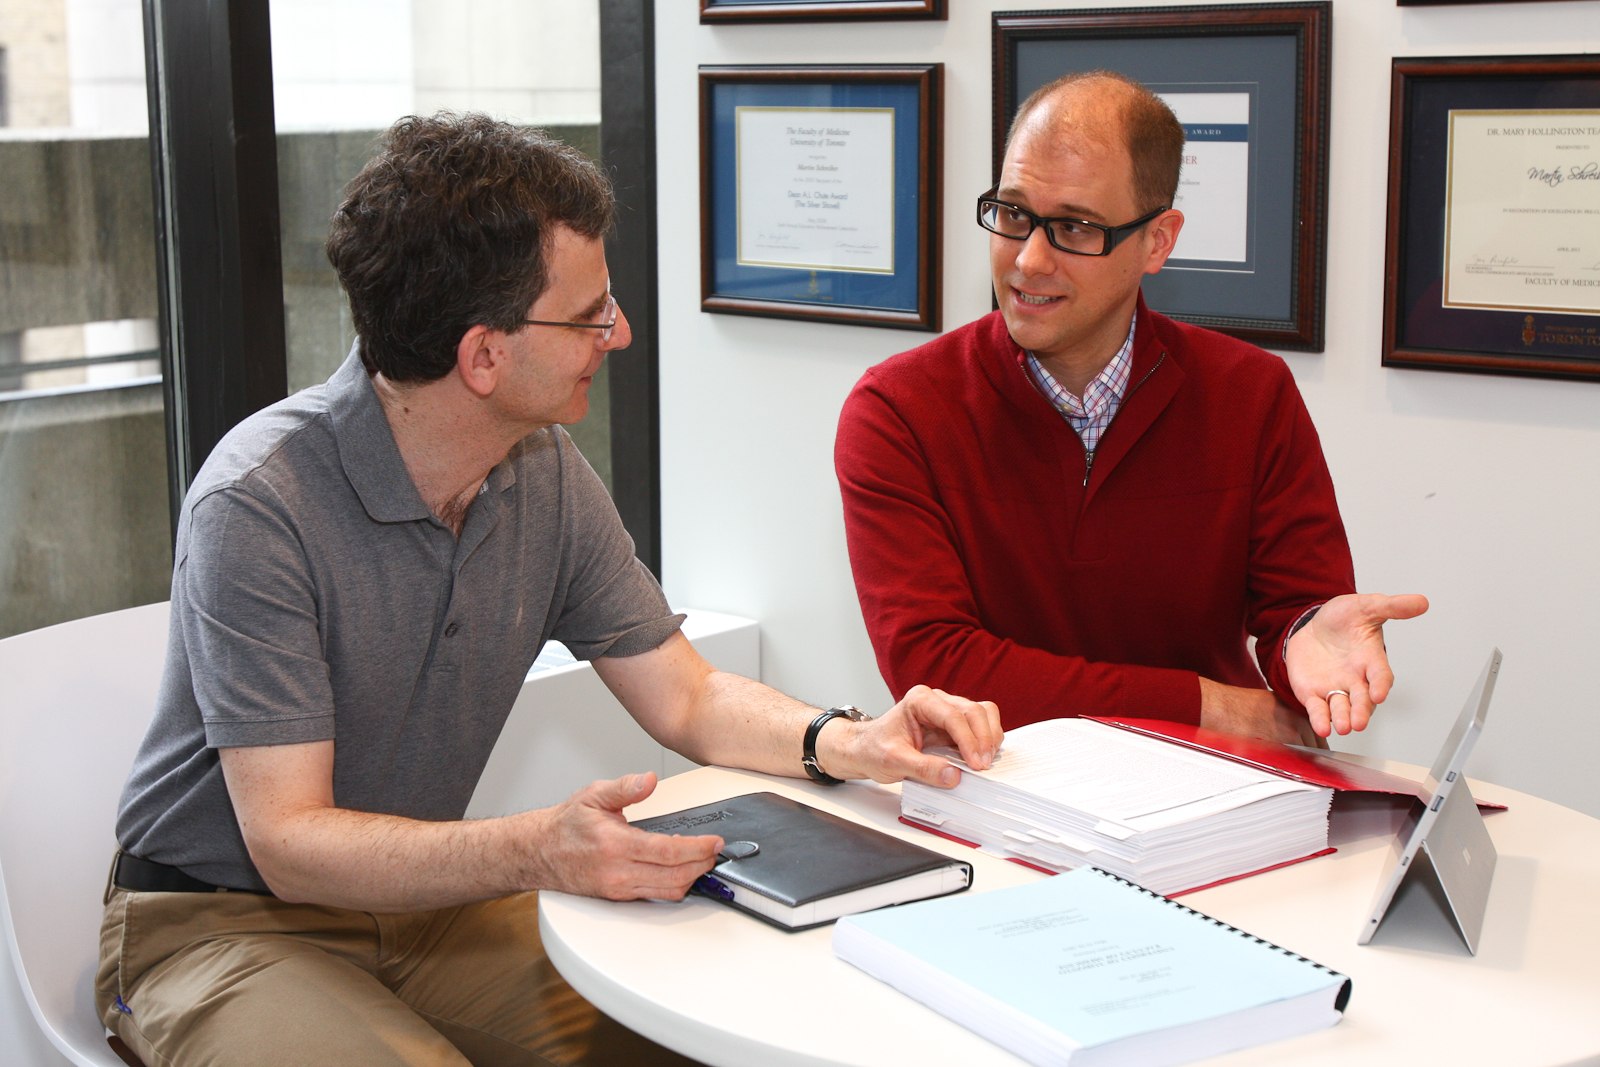 Dr. Schreiber and Chris Jones discuss the IAR